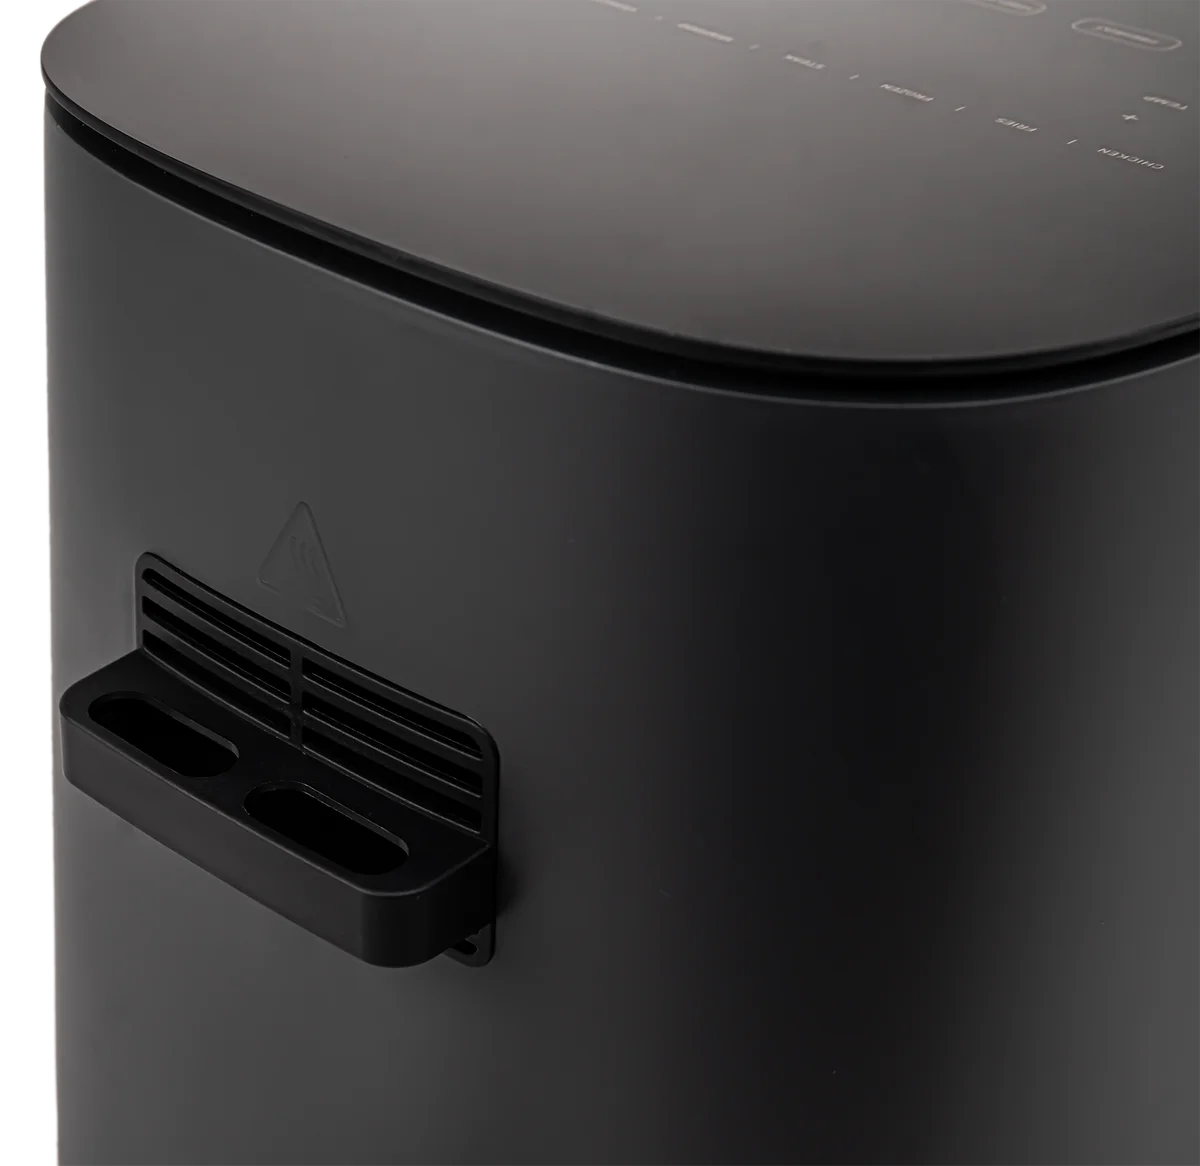 Cosori Pro Le 5.0-Quart Air Fryer